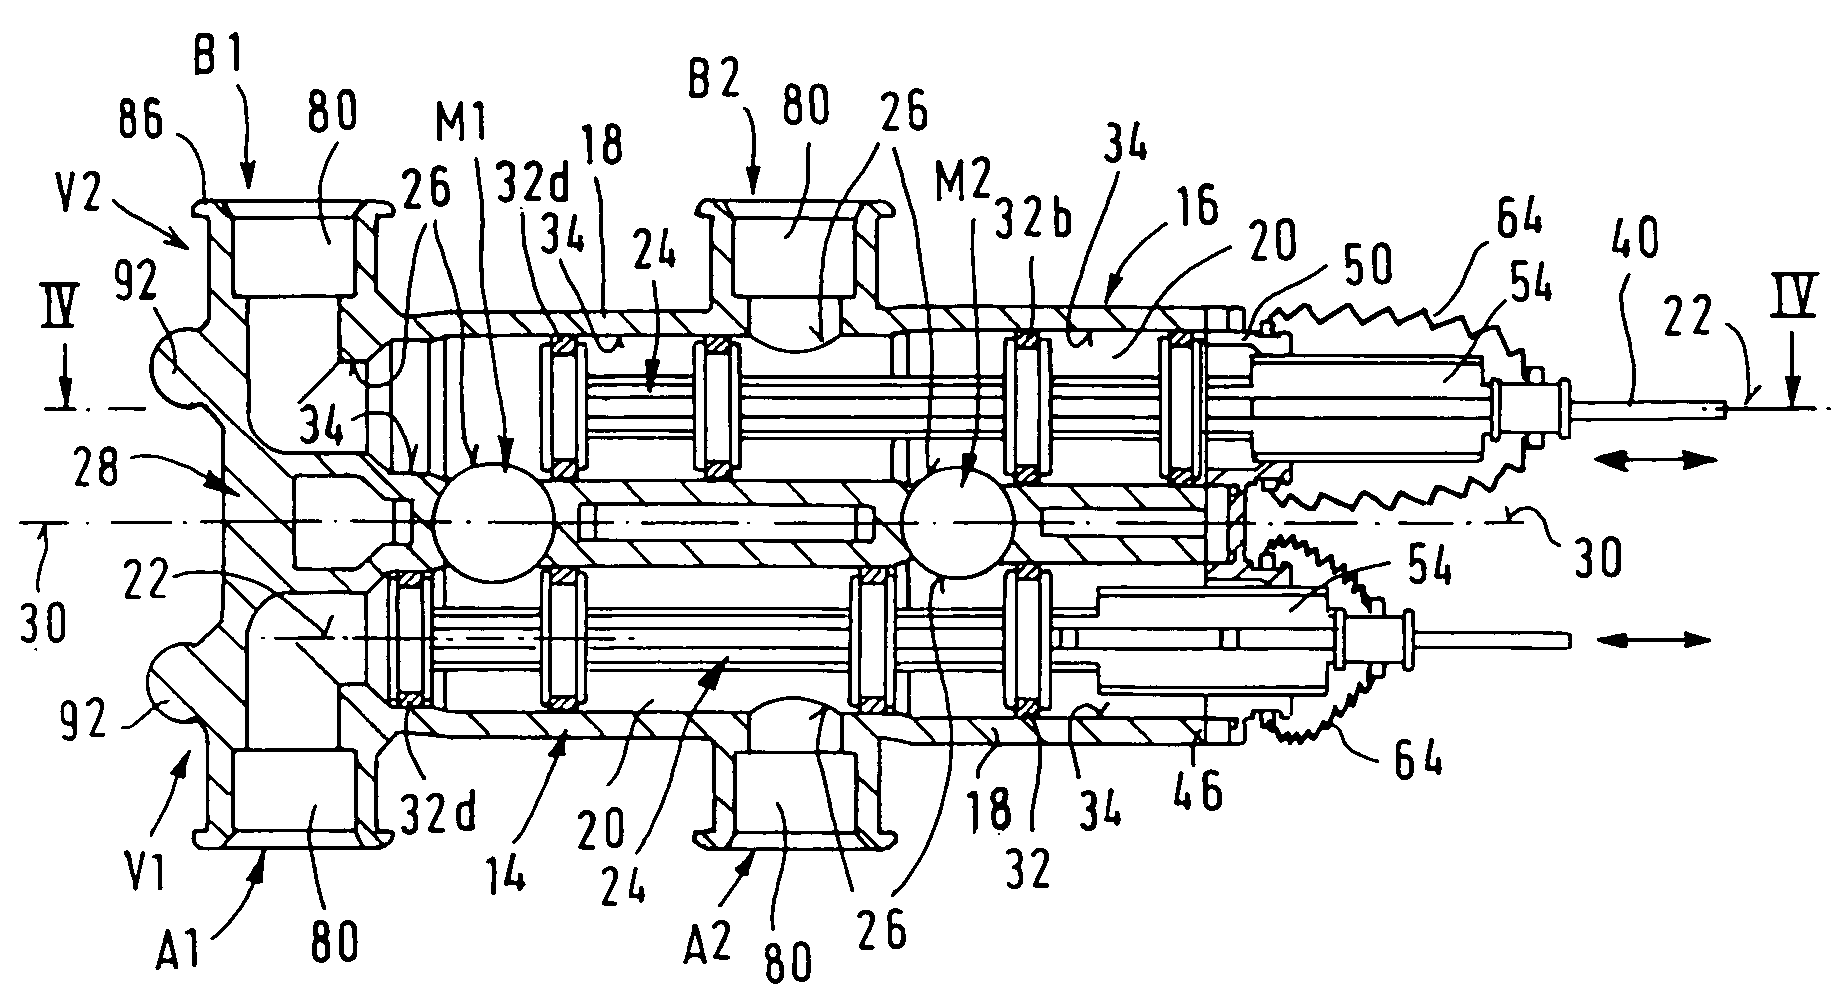 Multiway valve arrangement